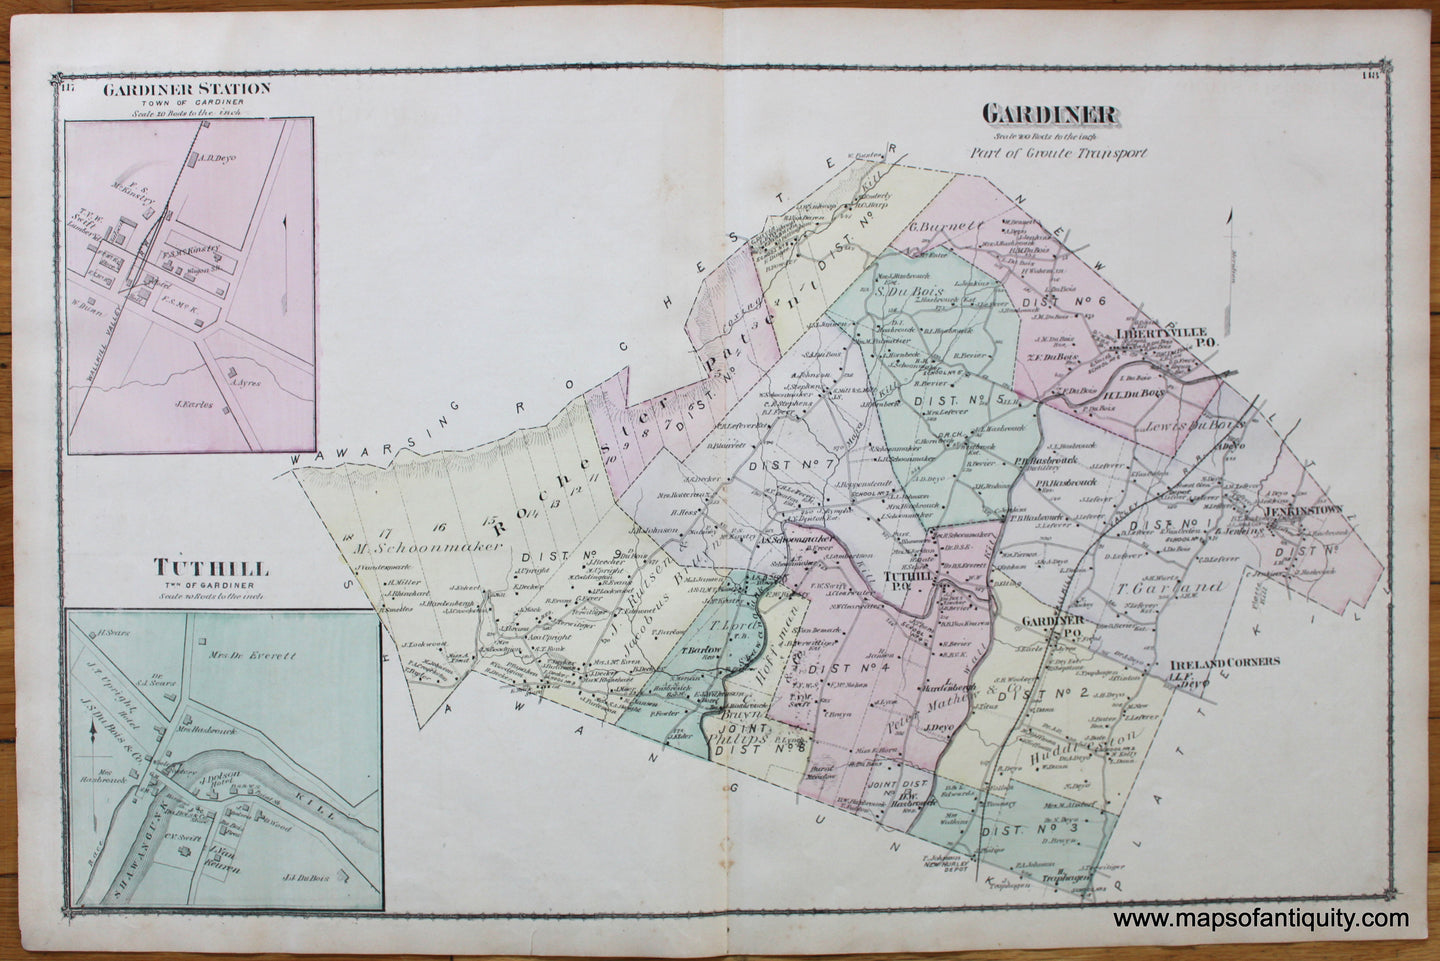 Gardiner-Gardiner-Station-Tuthill-Greenfield-Port-Benjamin-Kerhonkson-Ulster-County-New-York-1875-Beers-1870s-1800s-19th-century-antique-Maps-of-Antiquity